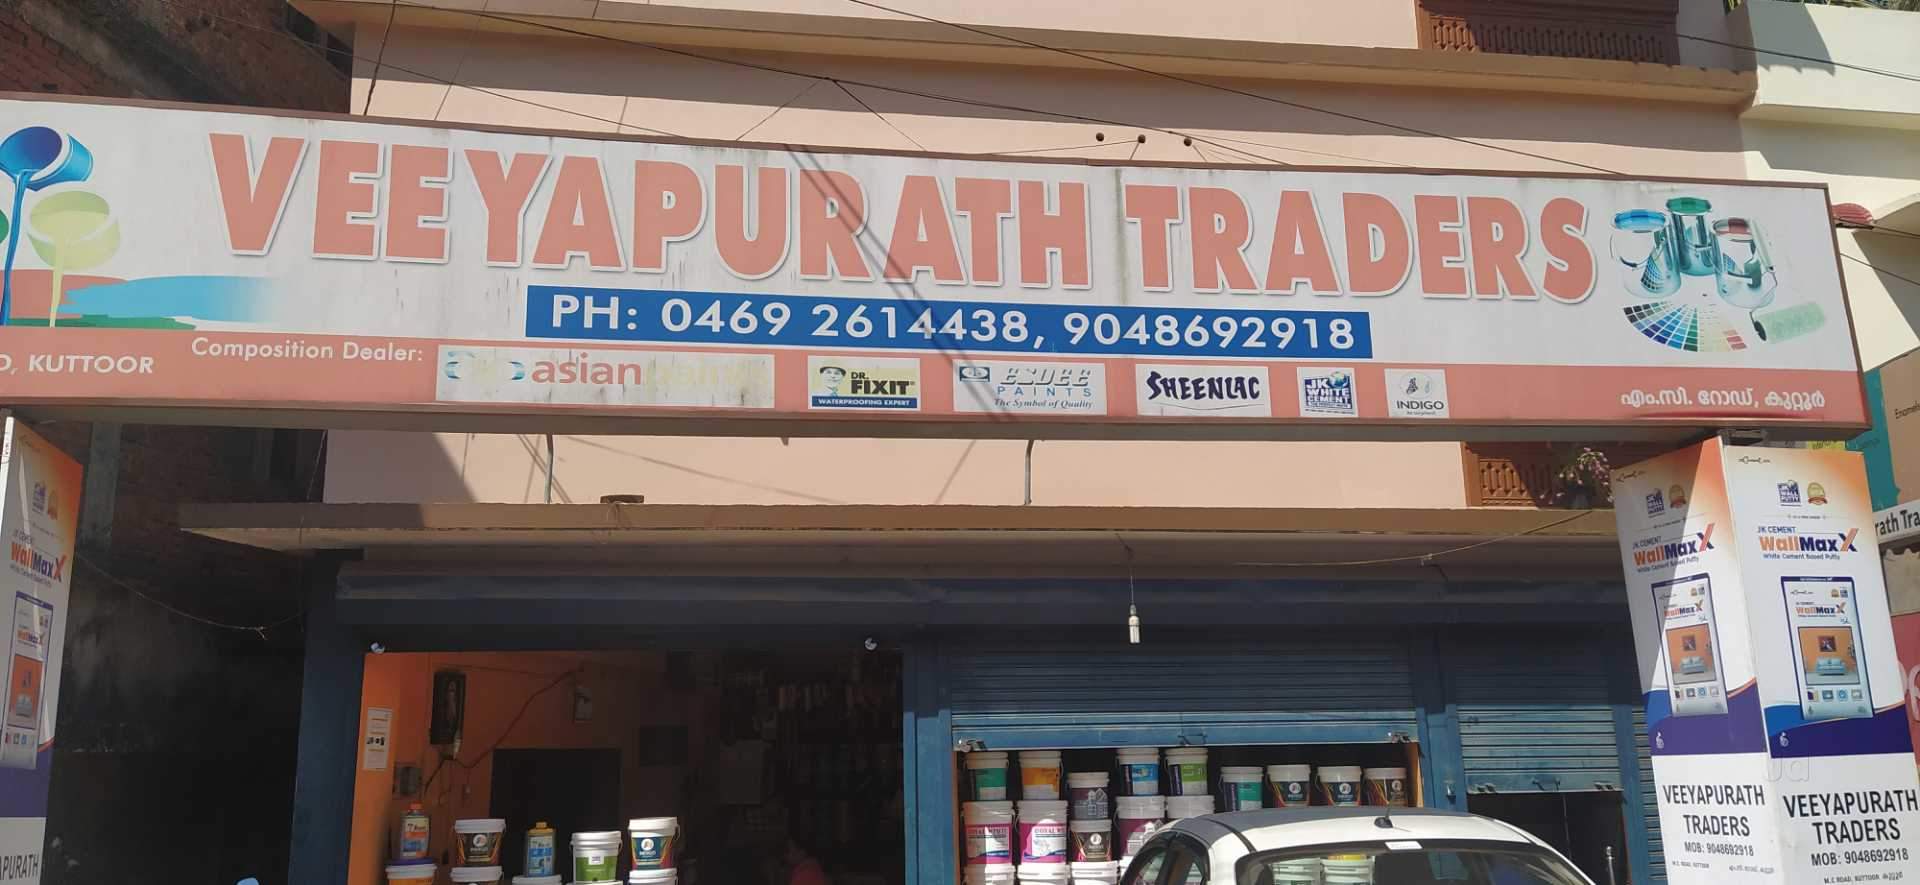 Veeyapurath Traders, PAINT SHOP,  service in Thiruvalla, Pathanamthitta